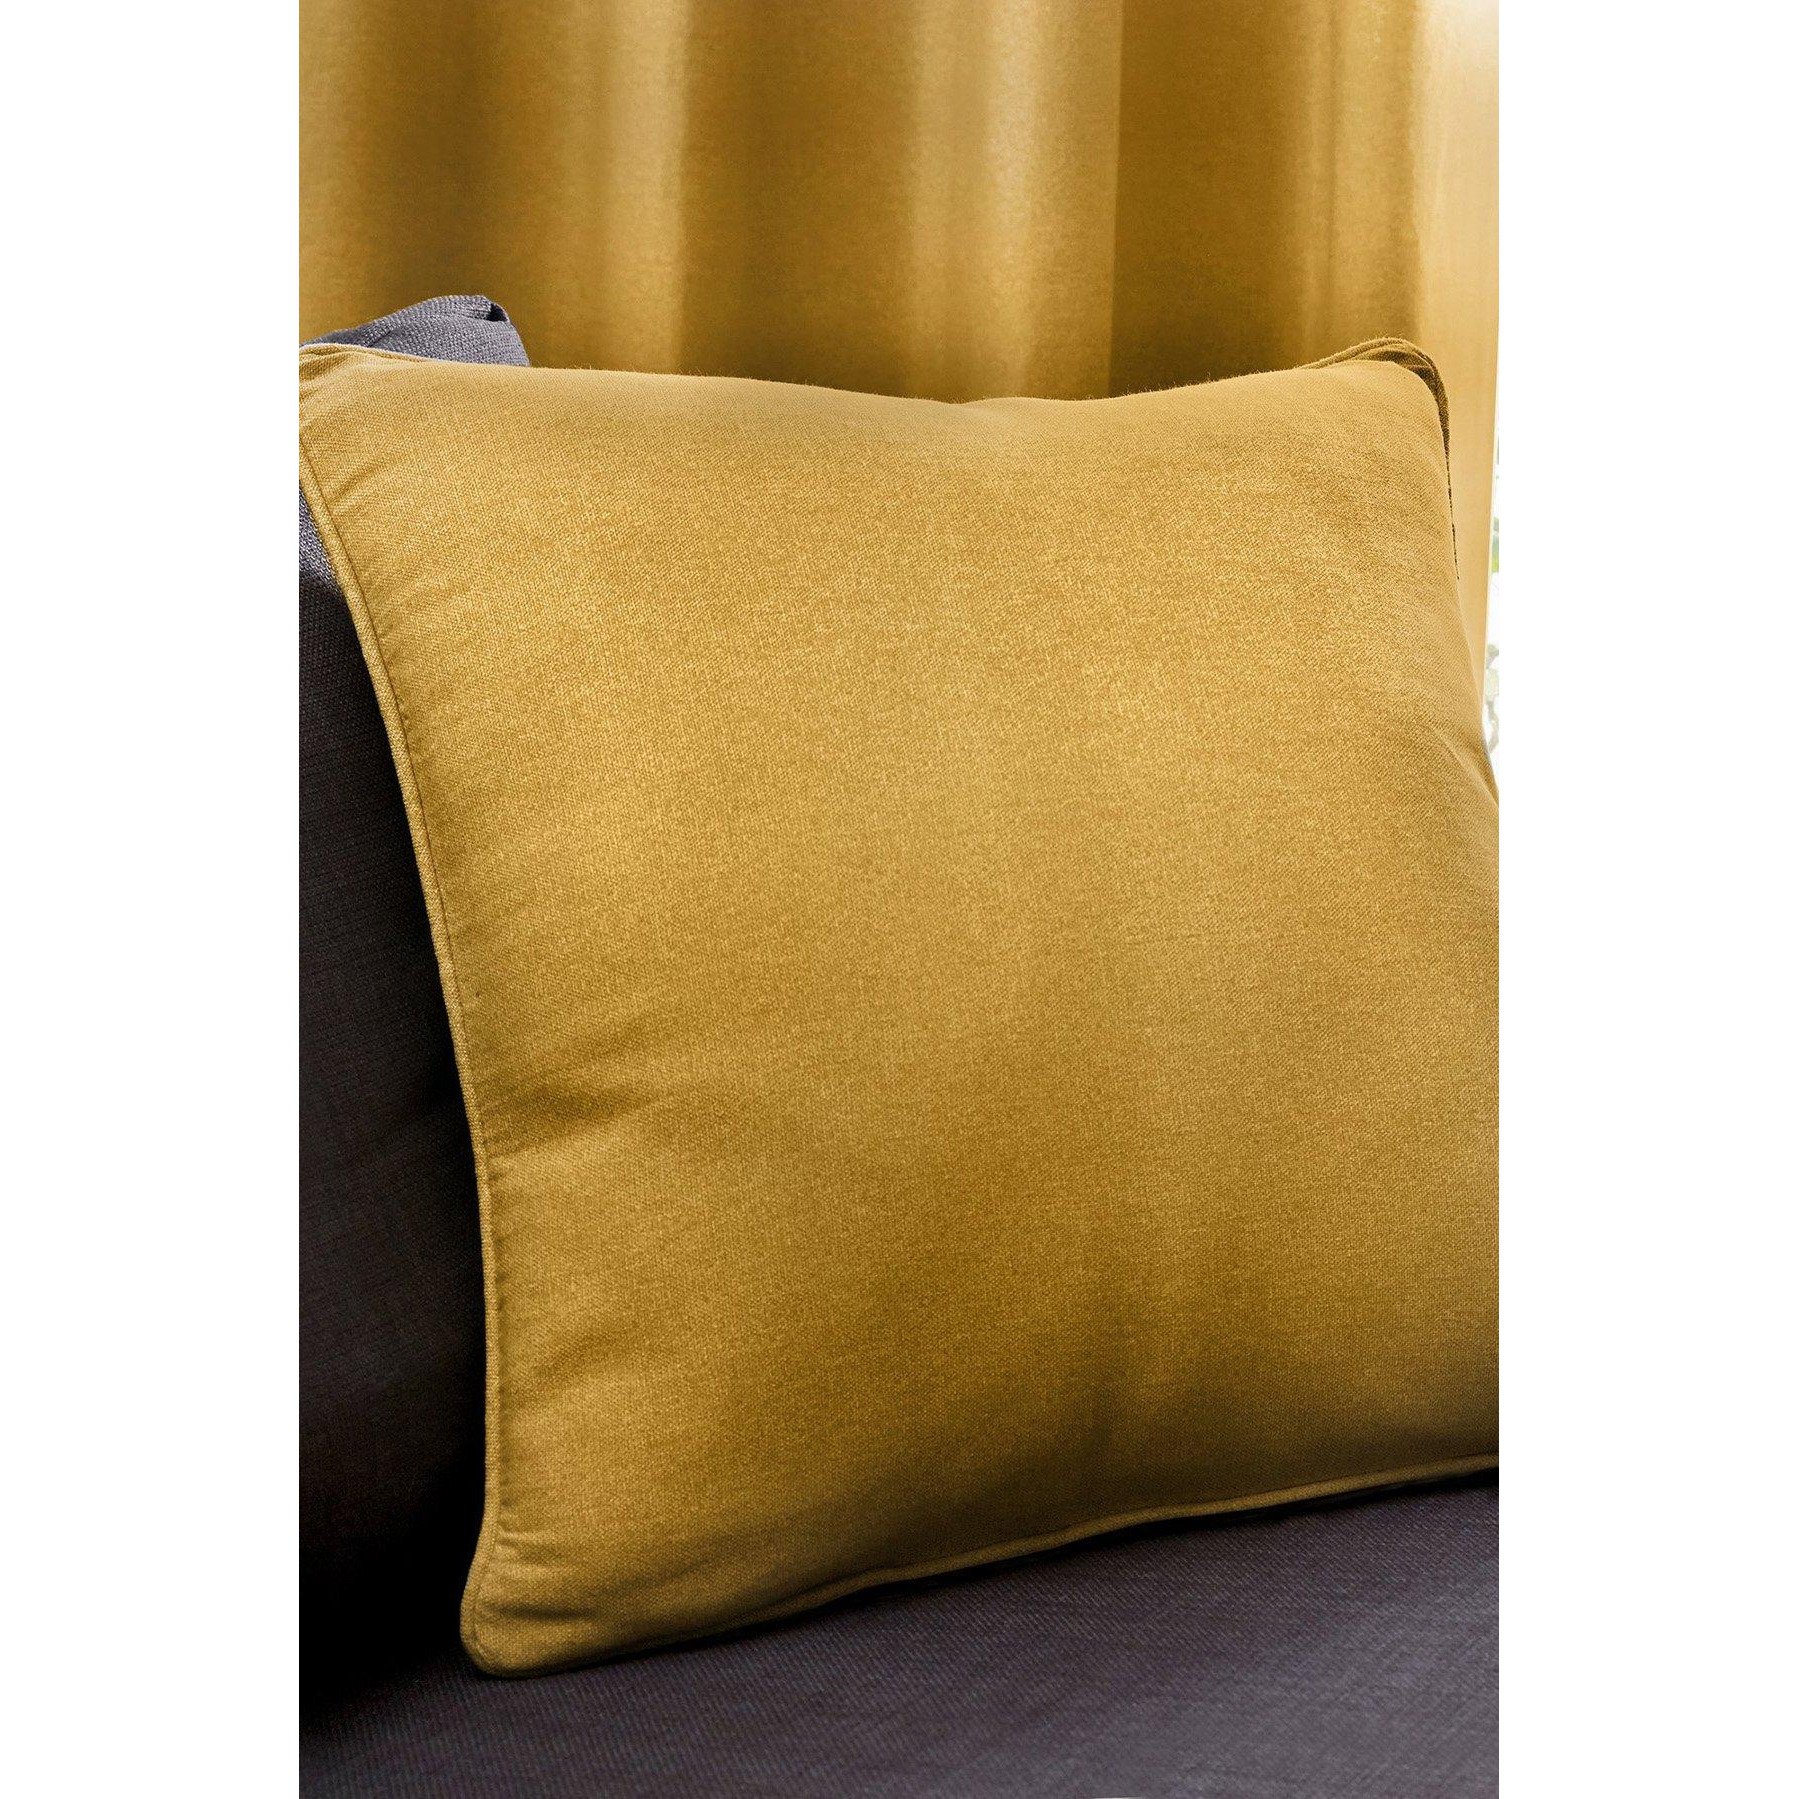 'Sorbonne' Luxury Plain Dyed Filled Cushion 100% Cotton - image 1